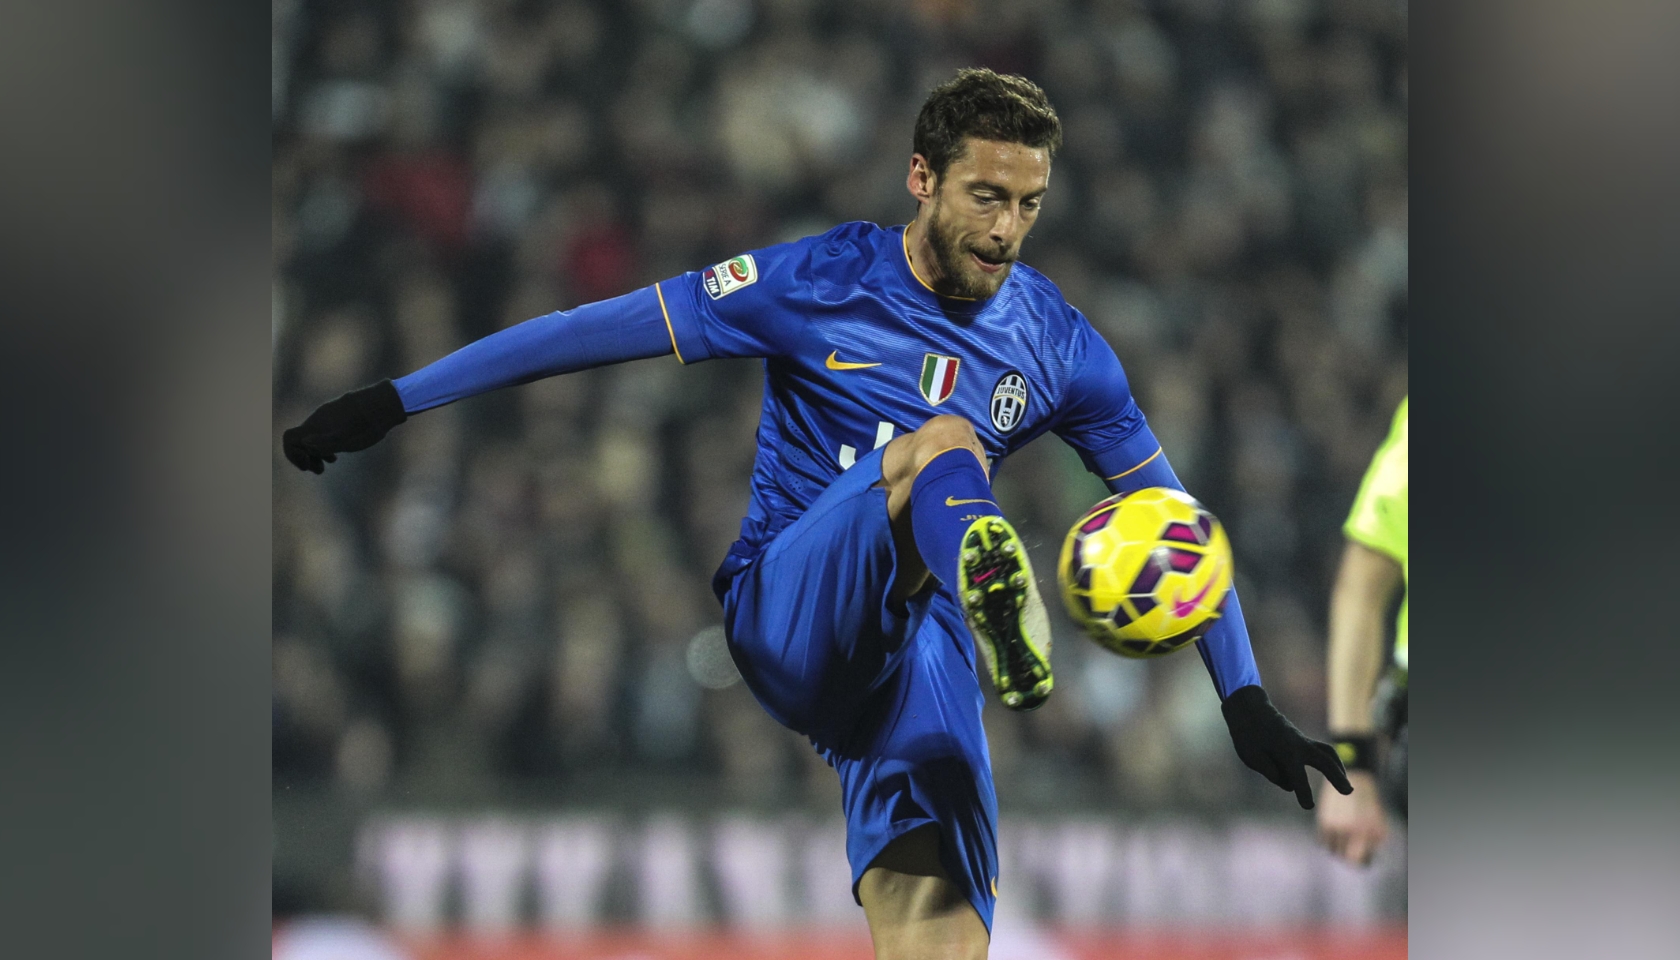 Maglia Ufficiale Marchisio Juventus, 2014/15 - Autografata - CharityStars